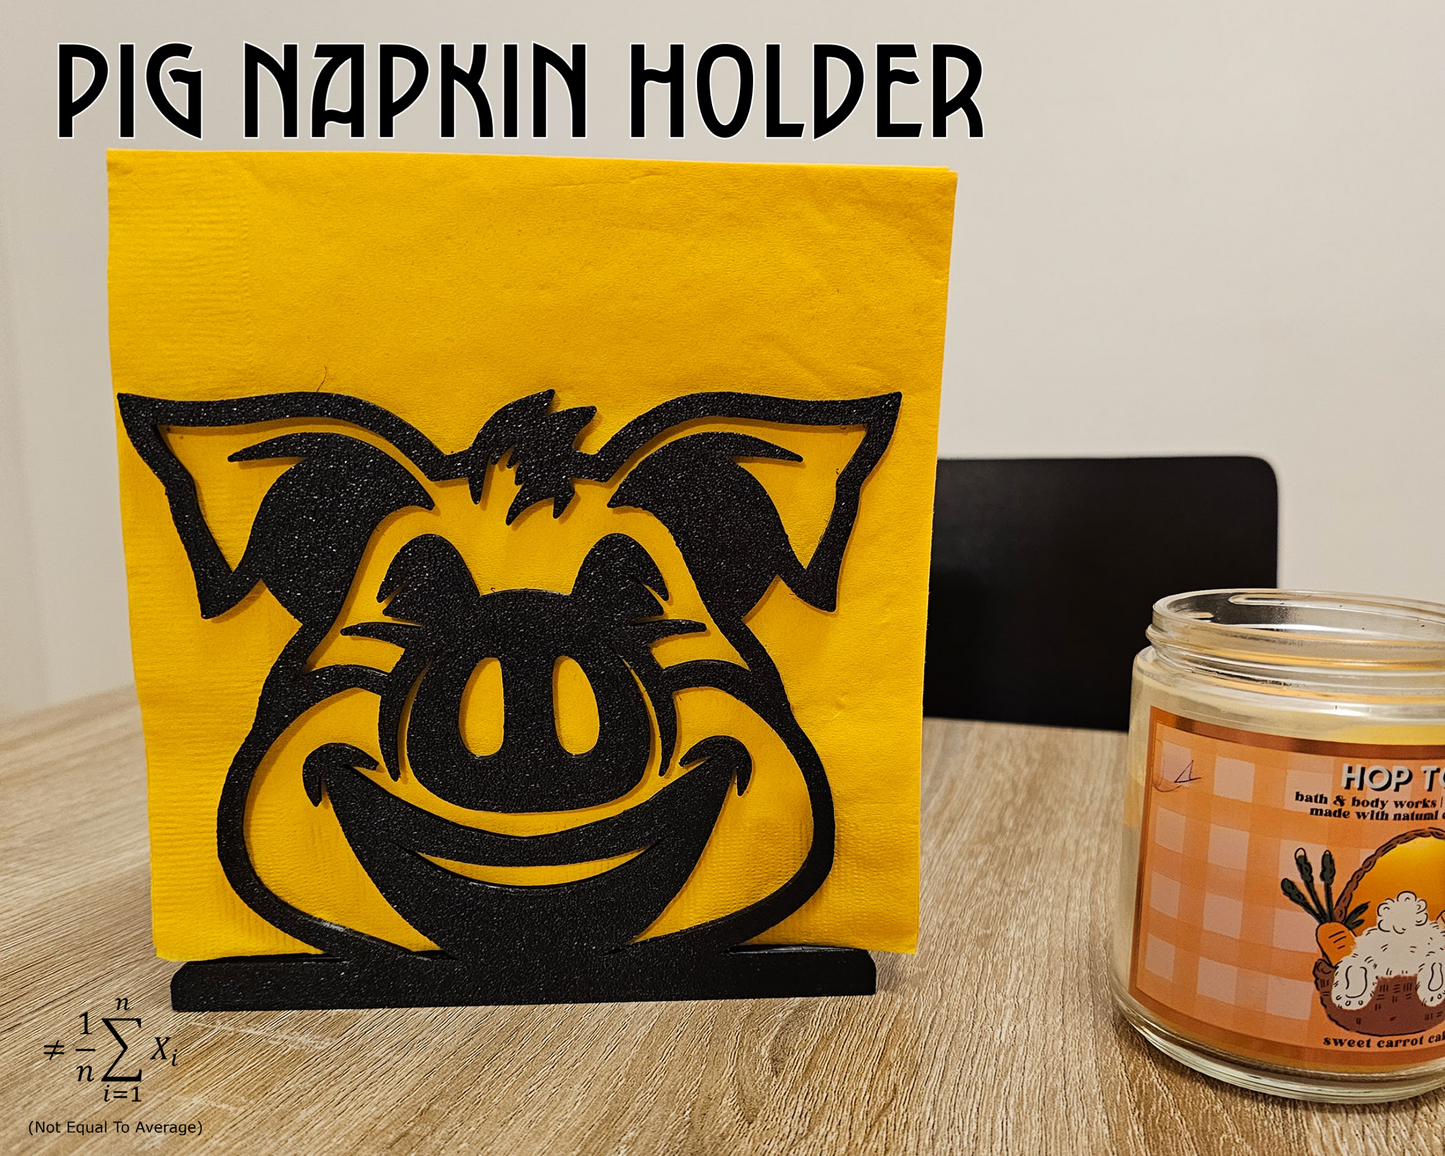 Pig Napkin Holder